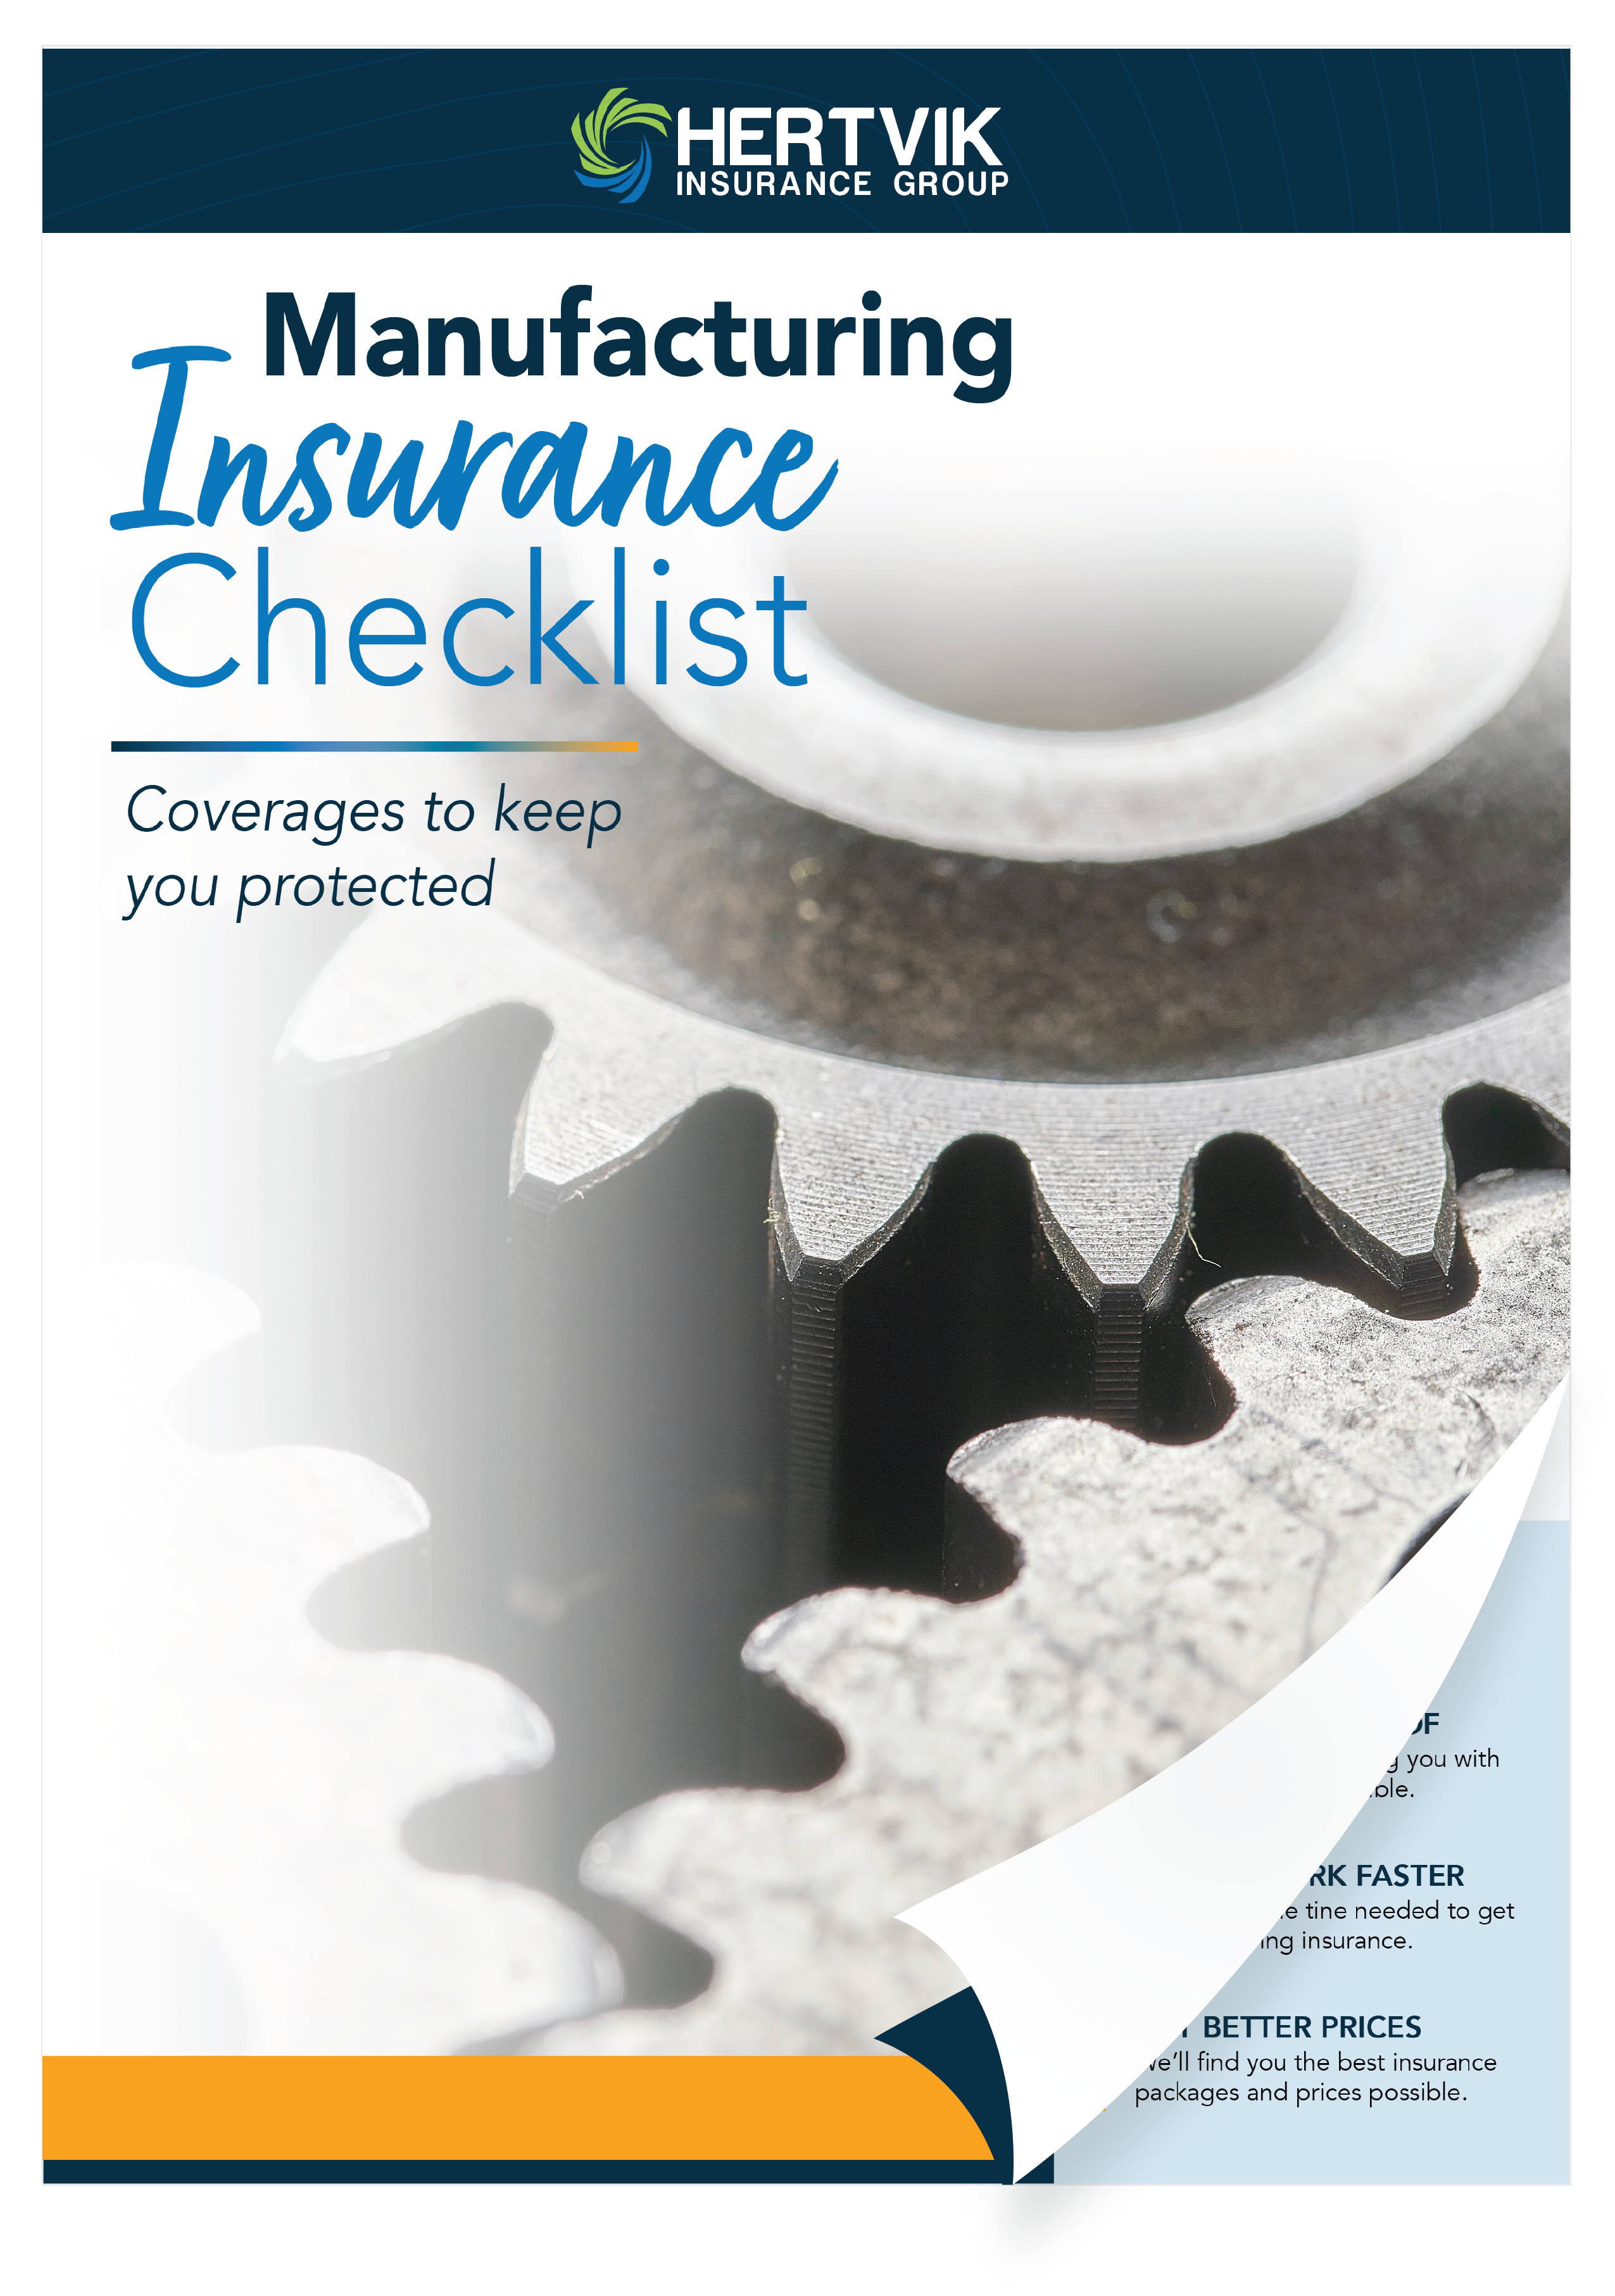 Manufacturing Insurance Checklist Hertvik Insurance Group Medina OH